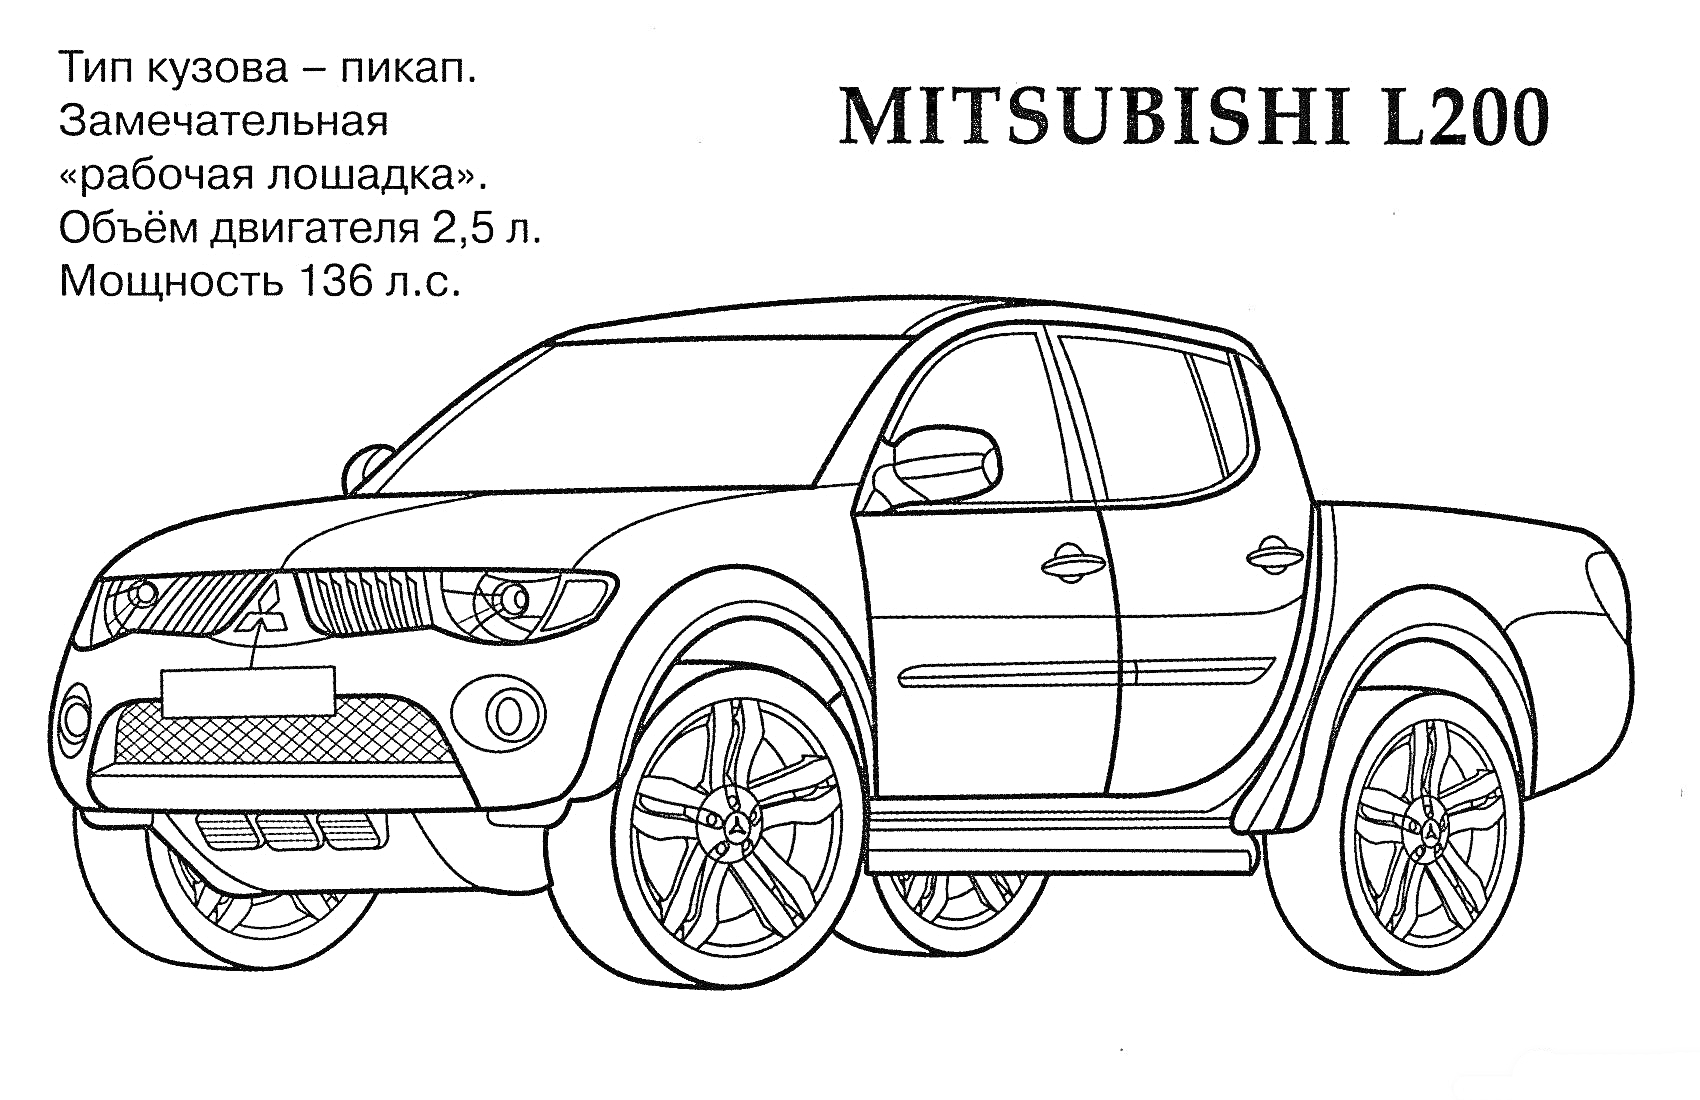 Mitsubishi L200 - Пикап с характеристиками